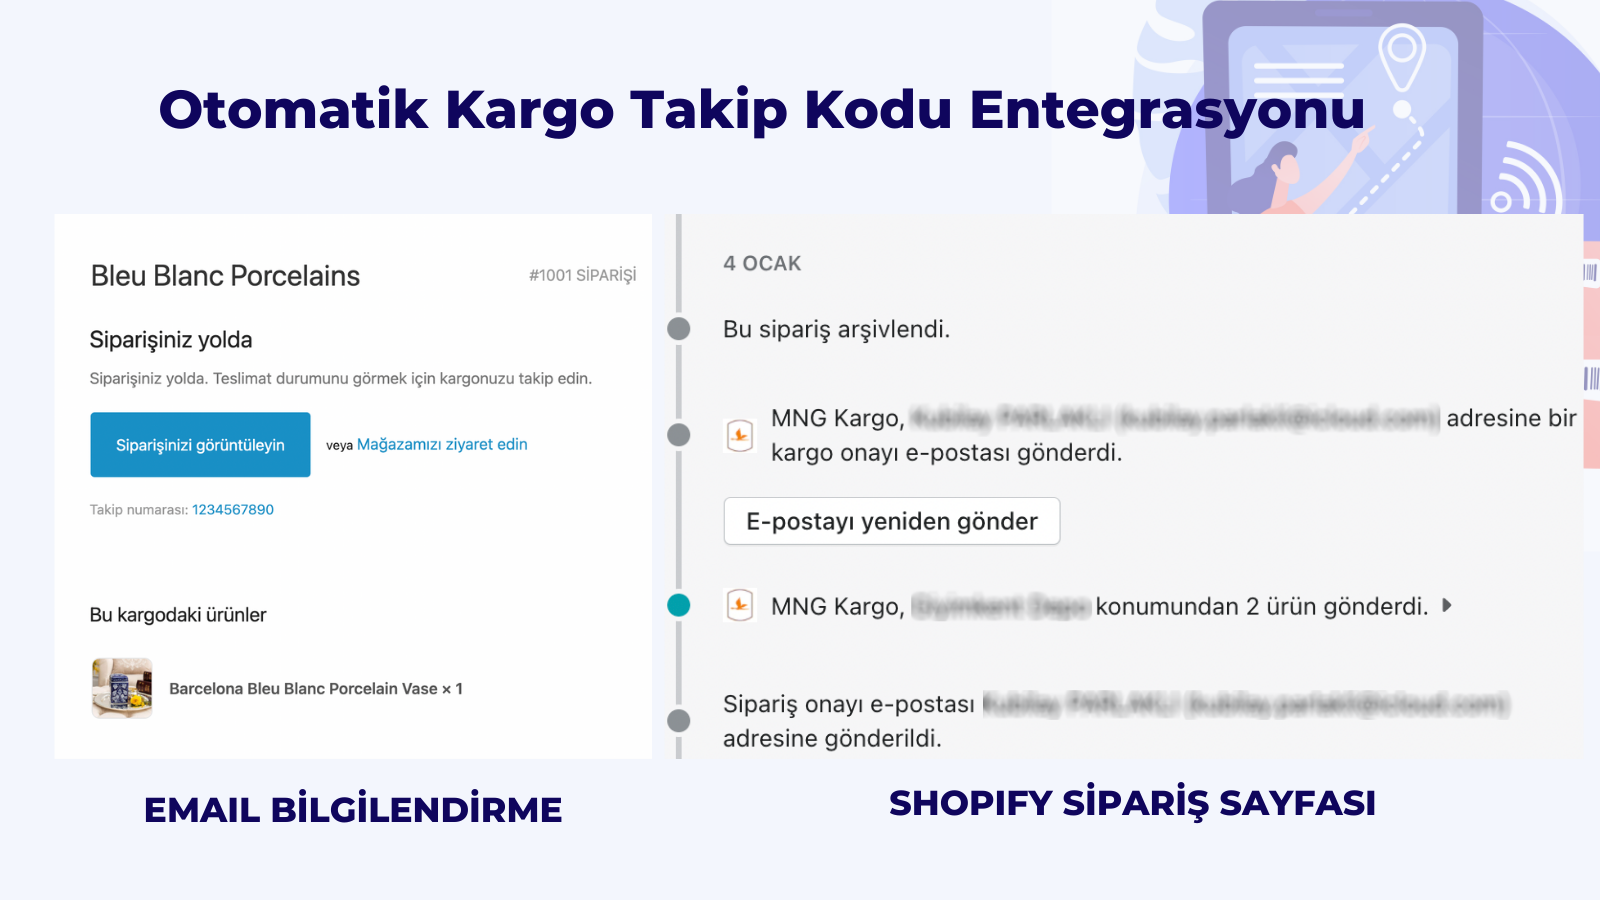 Shopify MNG Kargo Entegrasyon Otomatik Kargo Takip Kodu